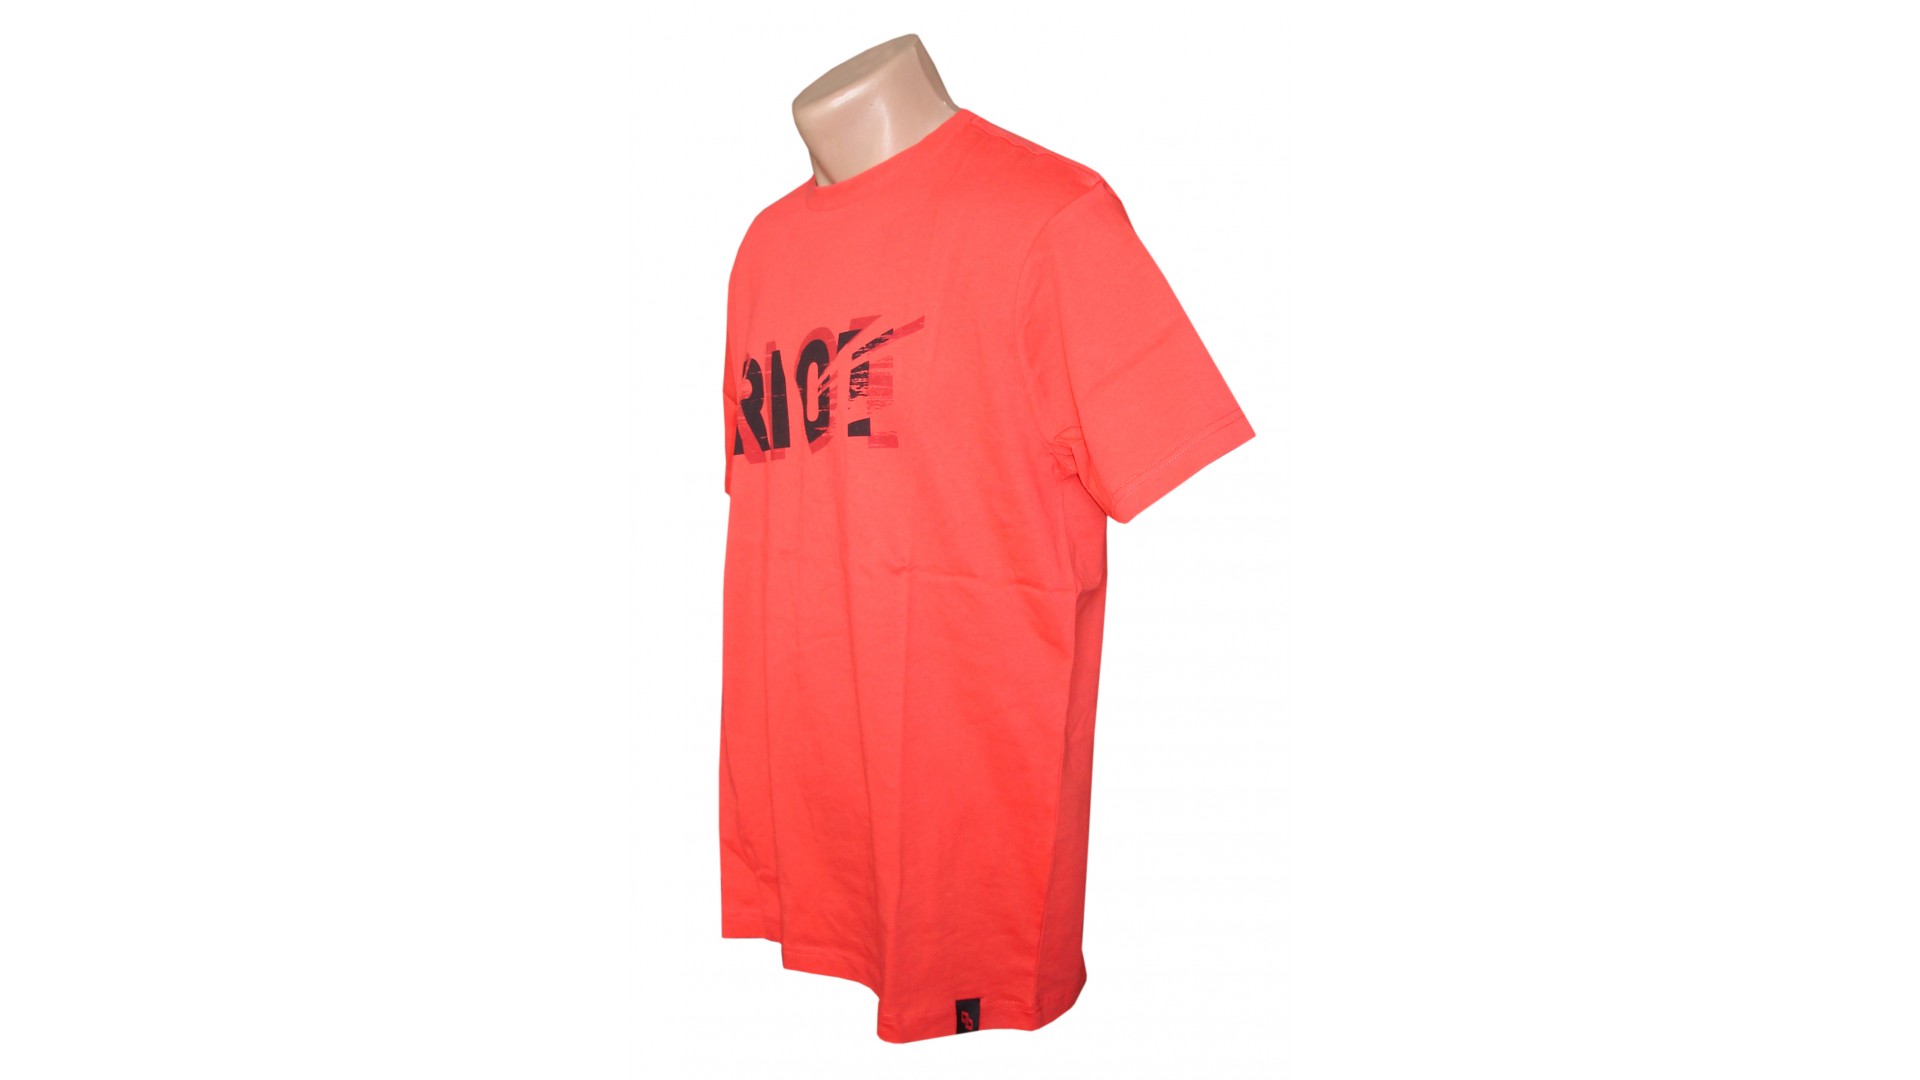 Футболка Ghost T-shirt RIOT red год 2016 вид сбоку